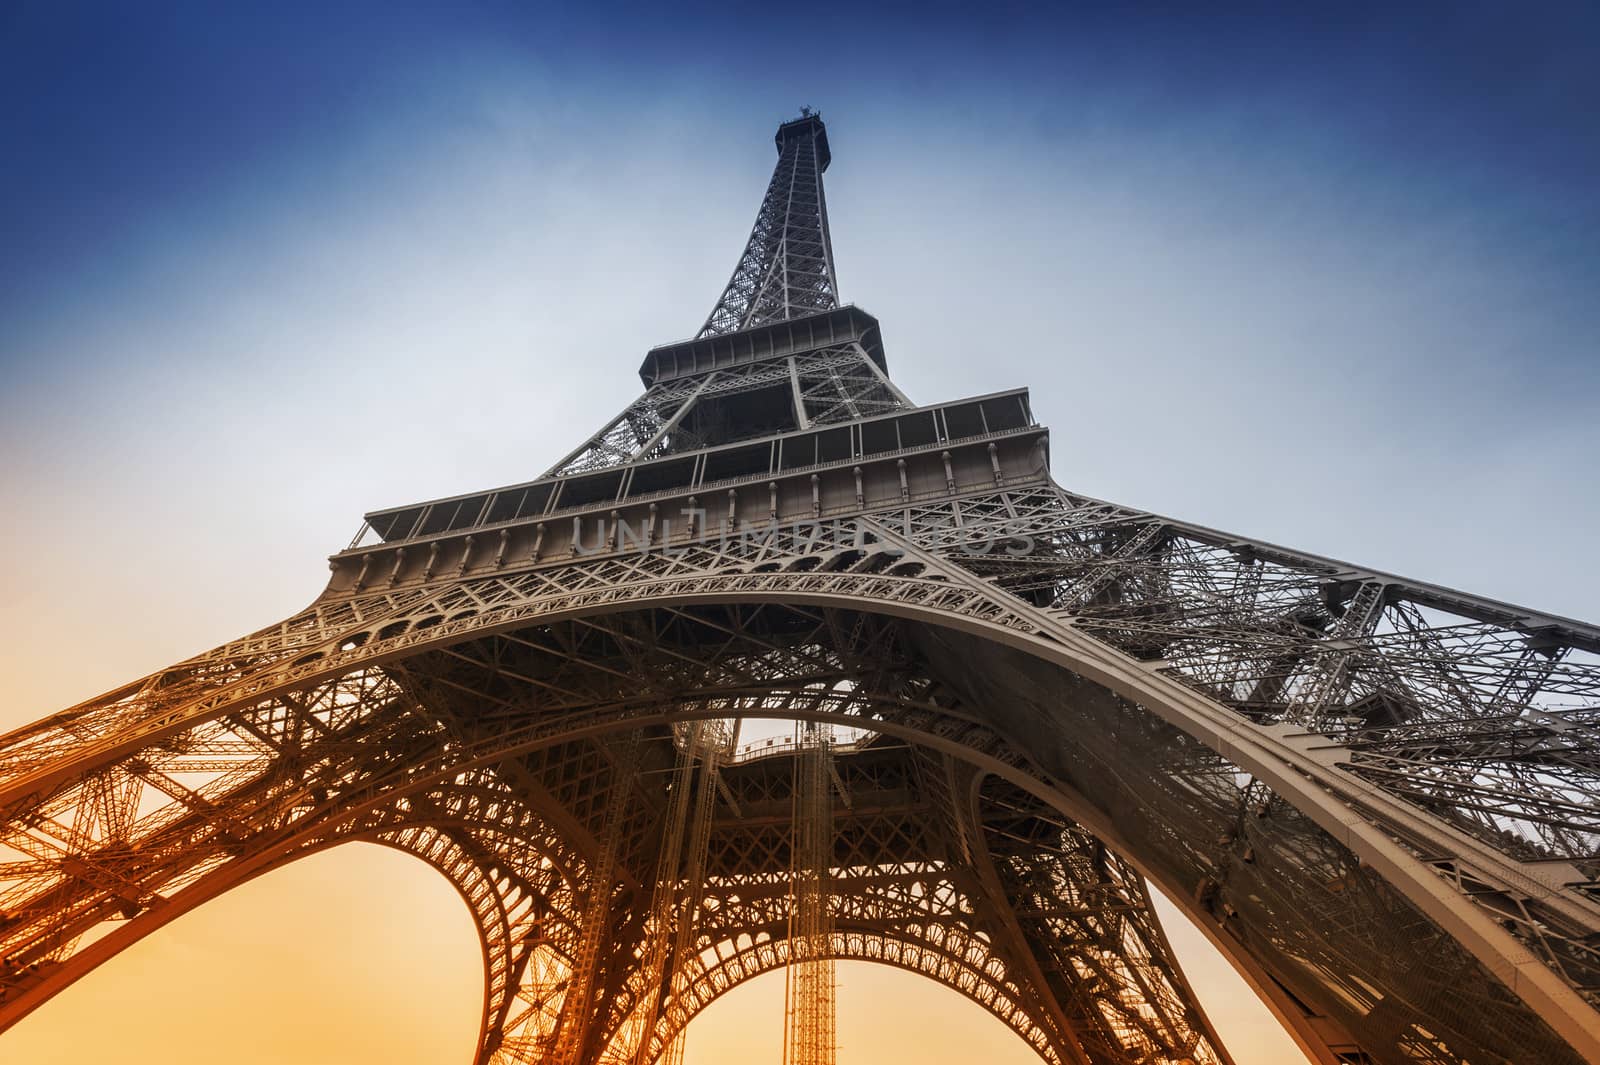 Eiffel tower, Paris, France by f/2sumicron